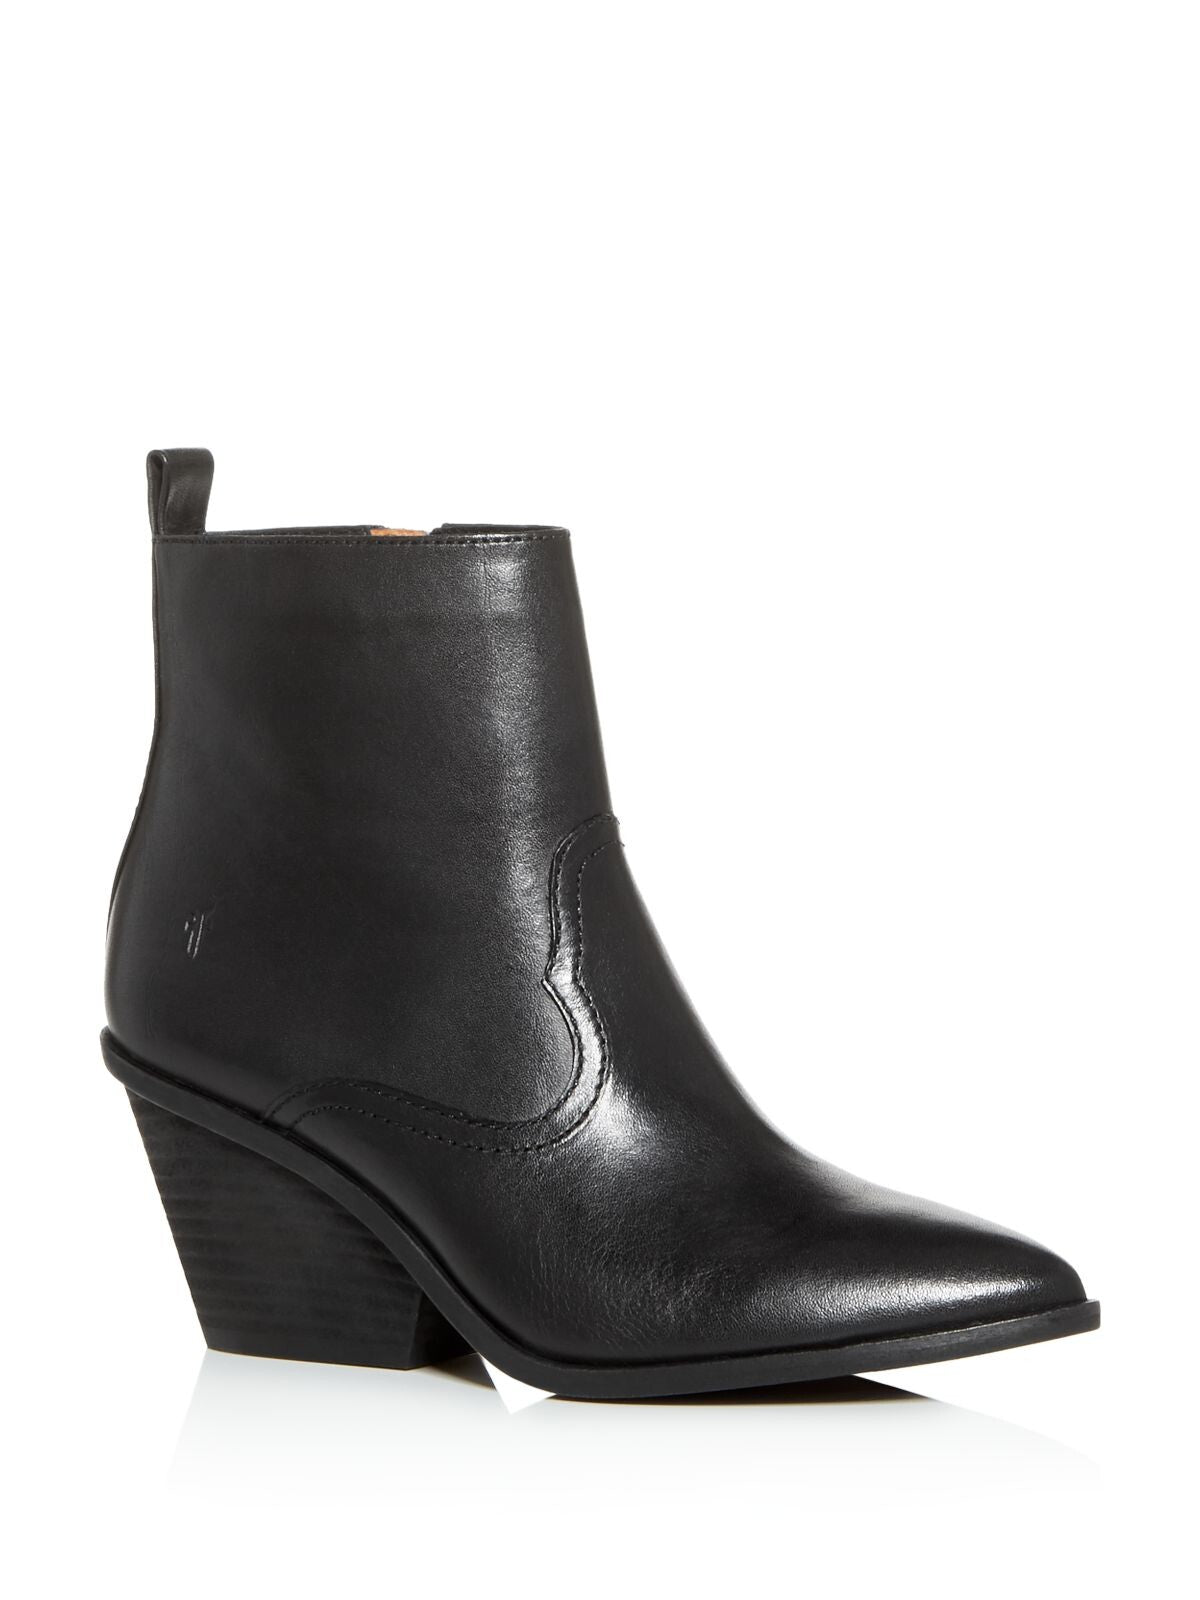 FRYE Womens Black Heel Tab Logo Comfort Amado Almond Toe Block Heel Zip-Up Leather Booties 8.5 M